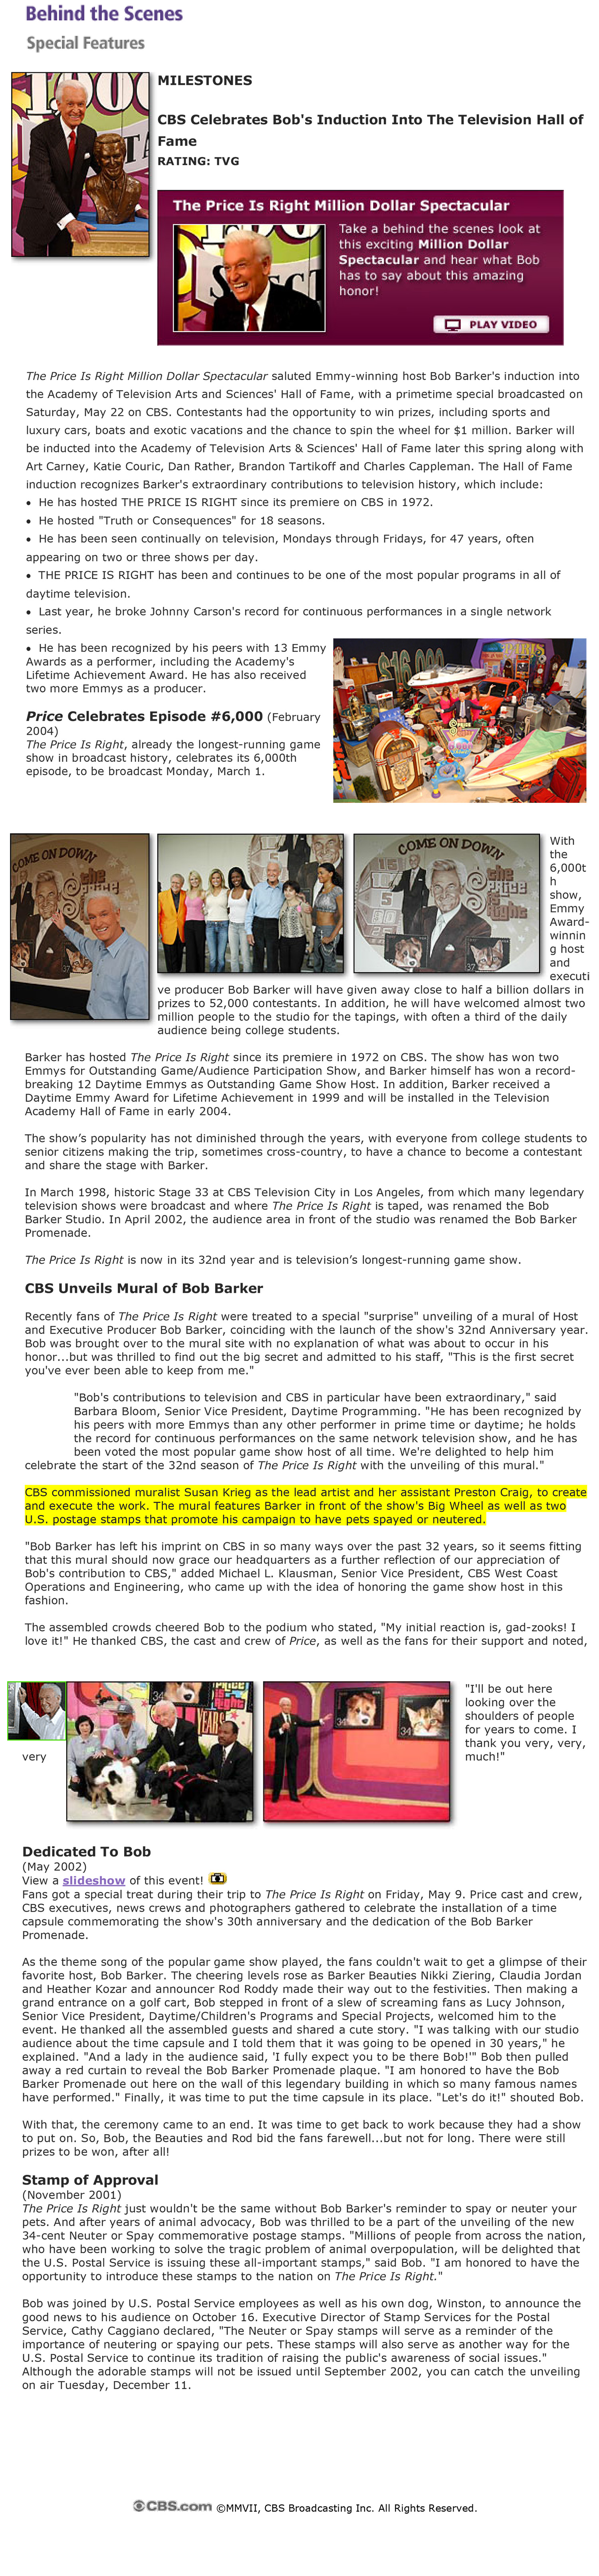 CBS online newsletter